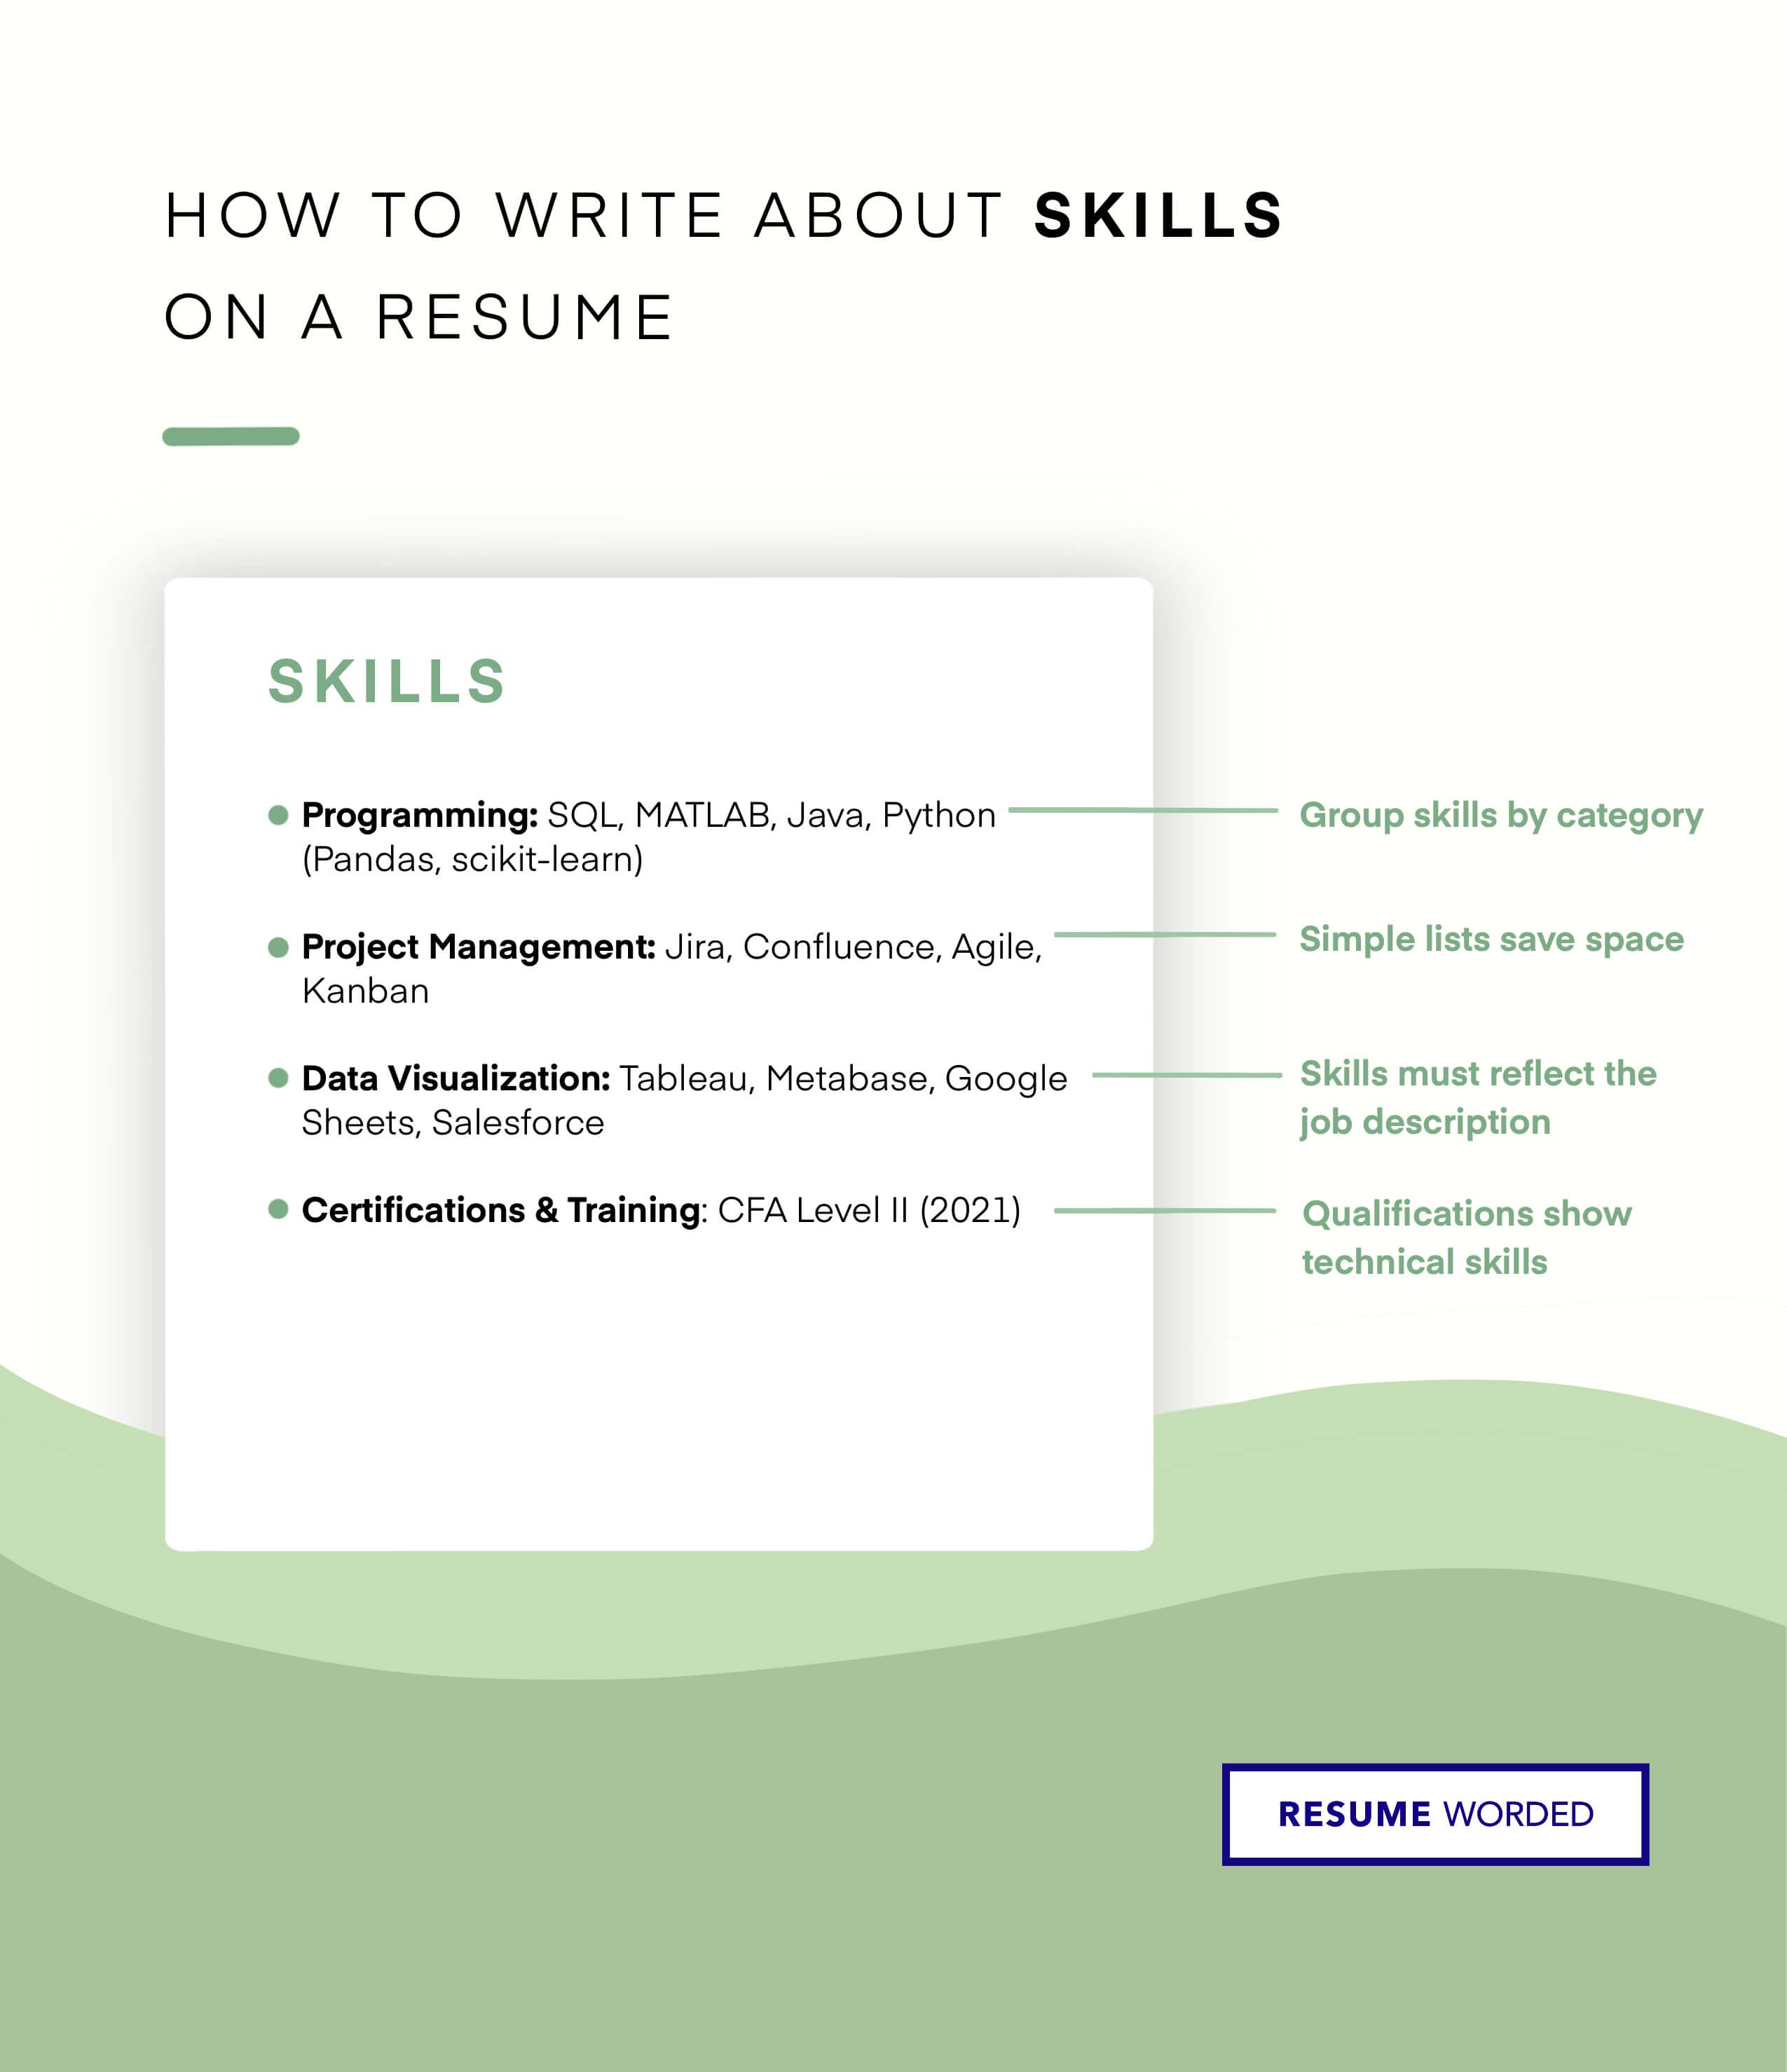 Prove your writing skills - Technical Writer CV